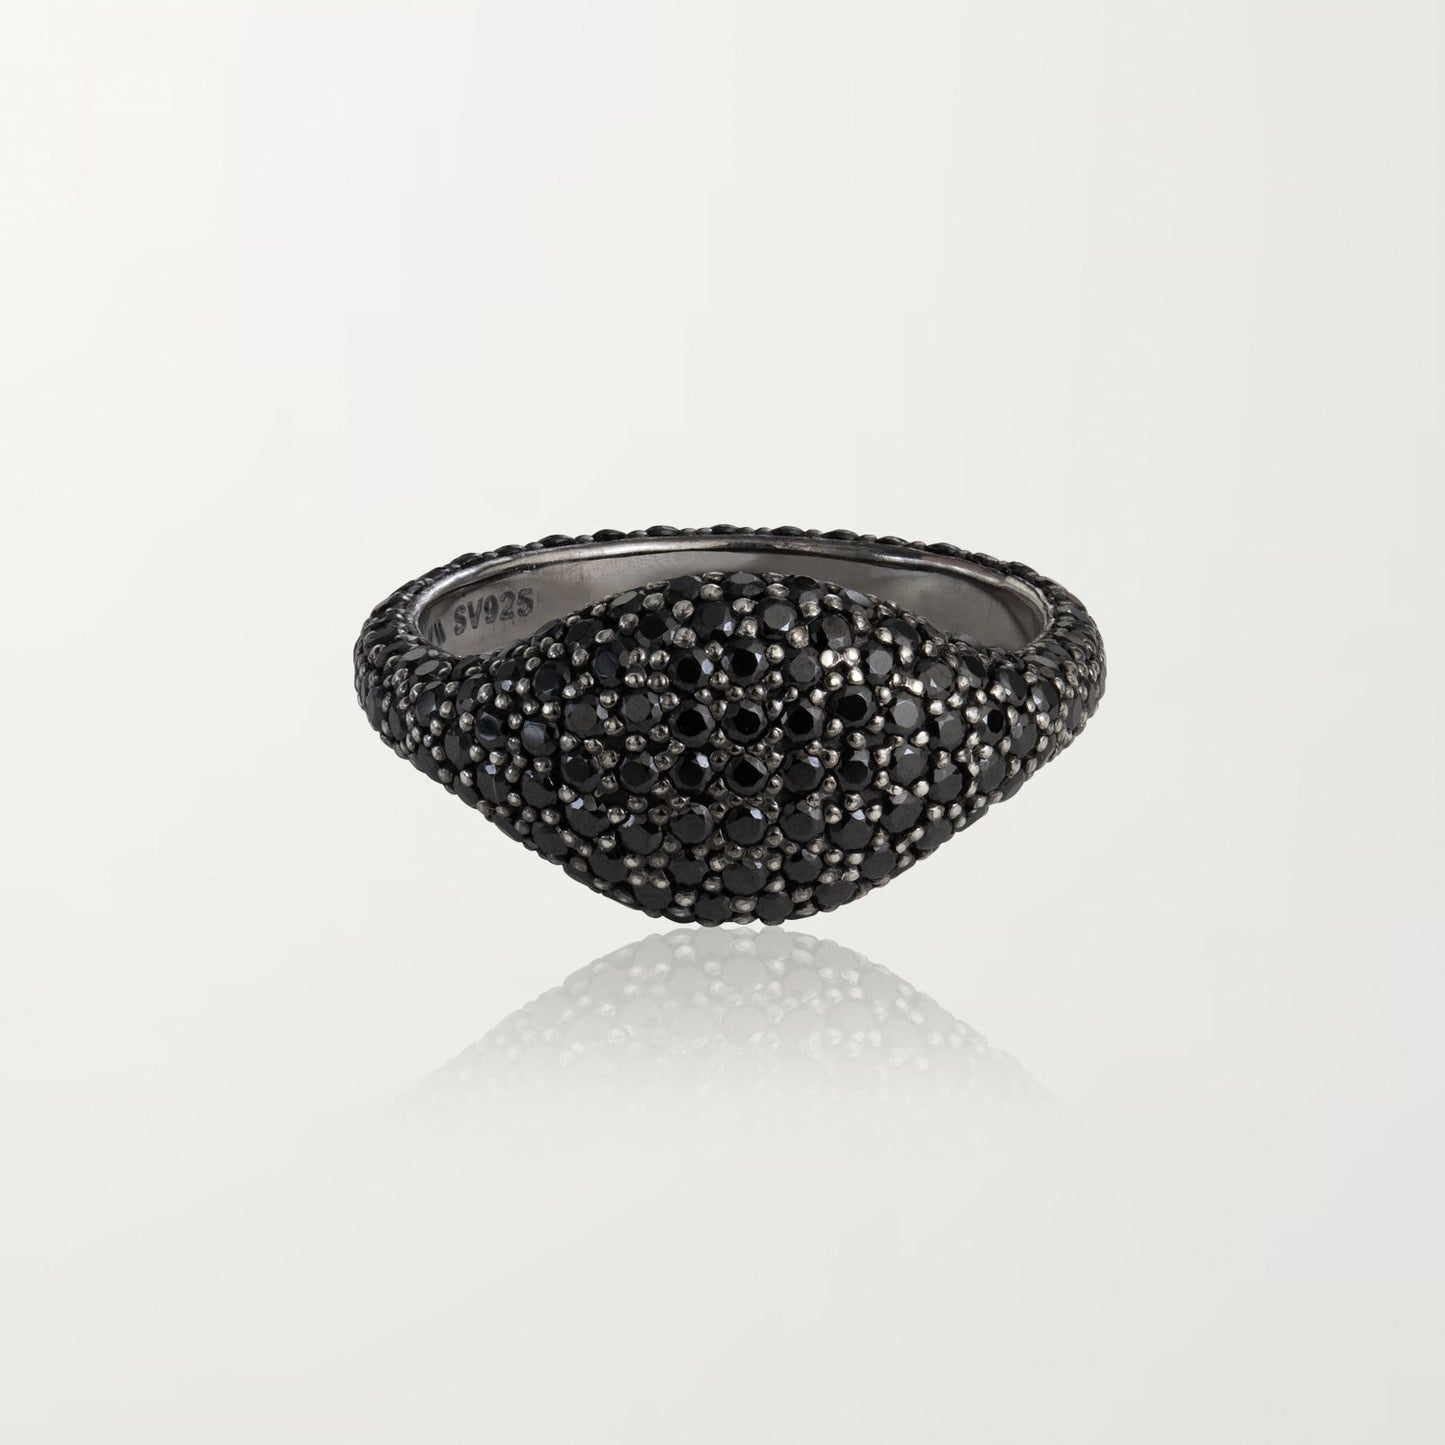 The Caviar Ring